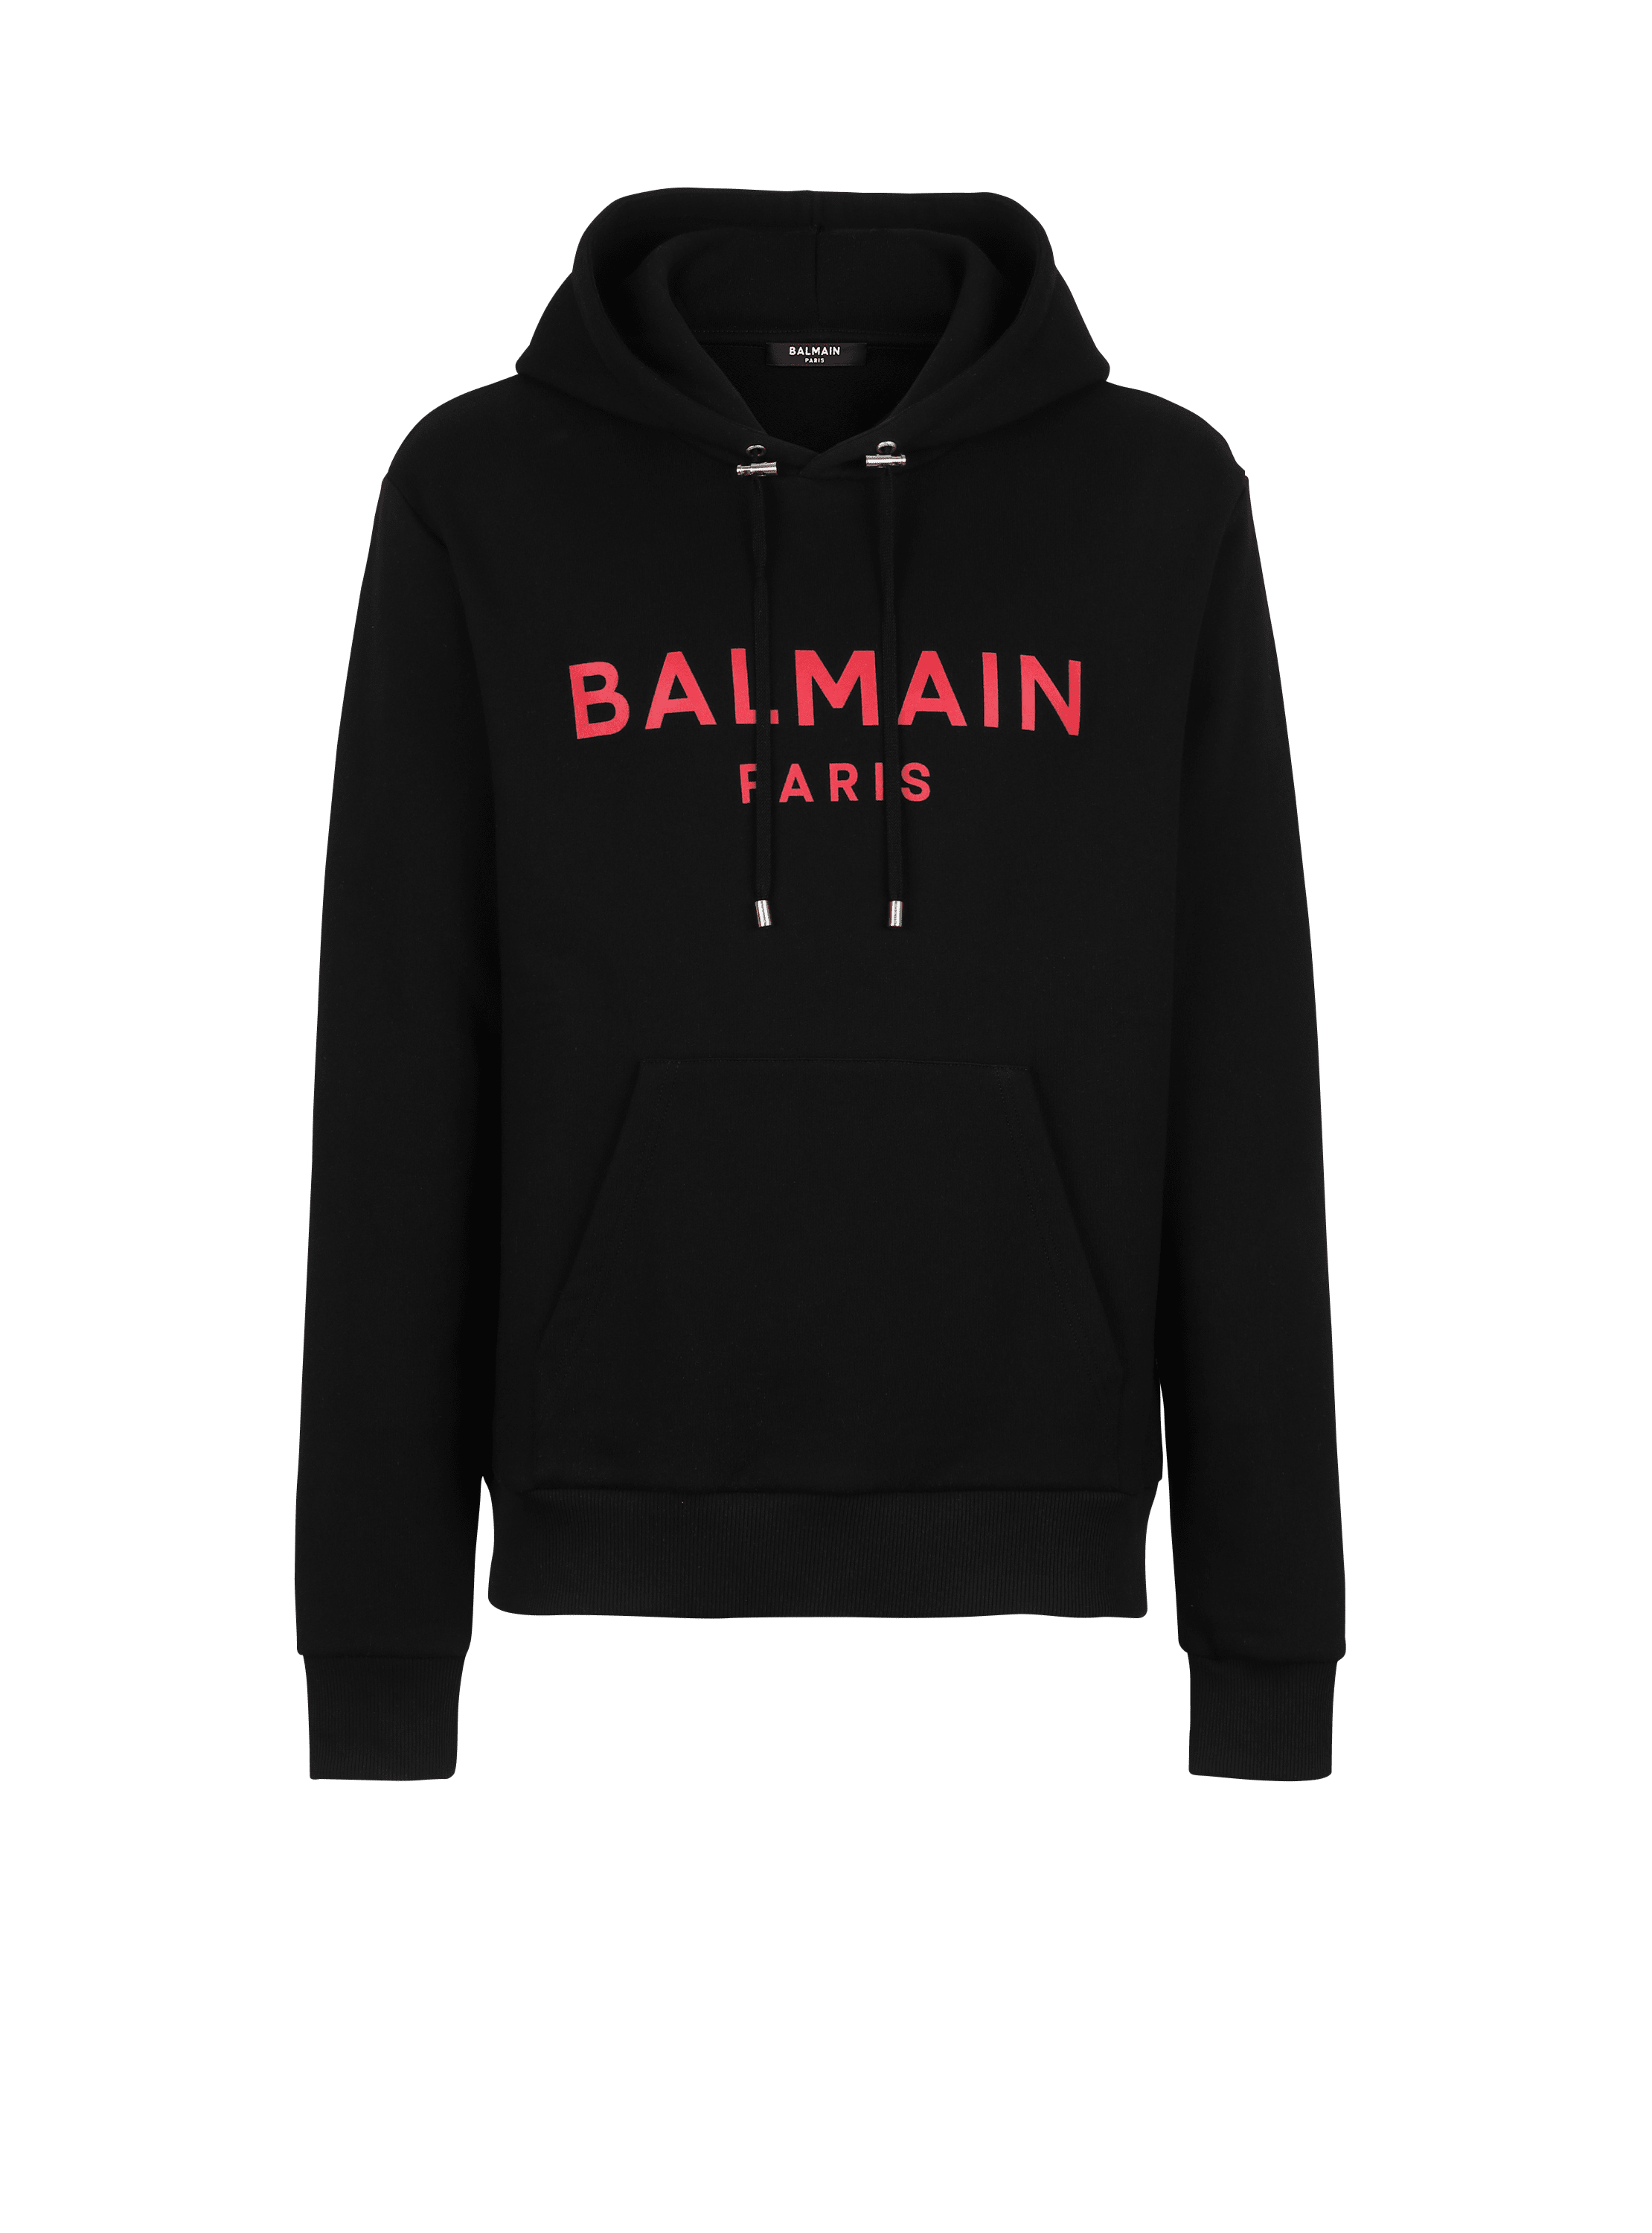 Cotton sweatshirt with Balmain Paris logo print, black, hi-res